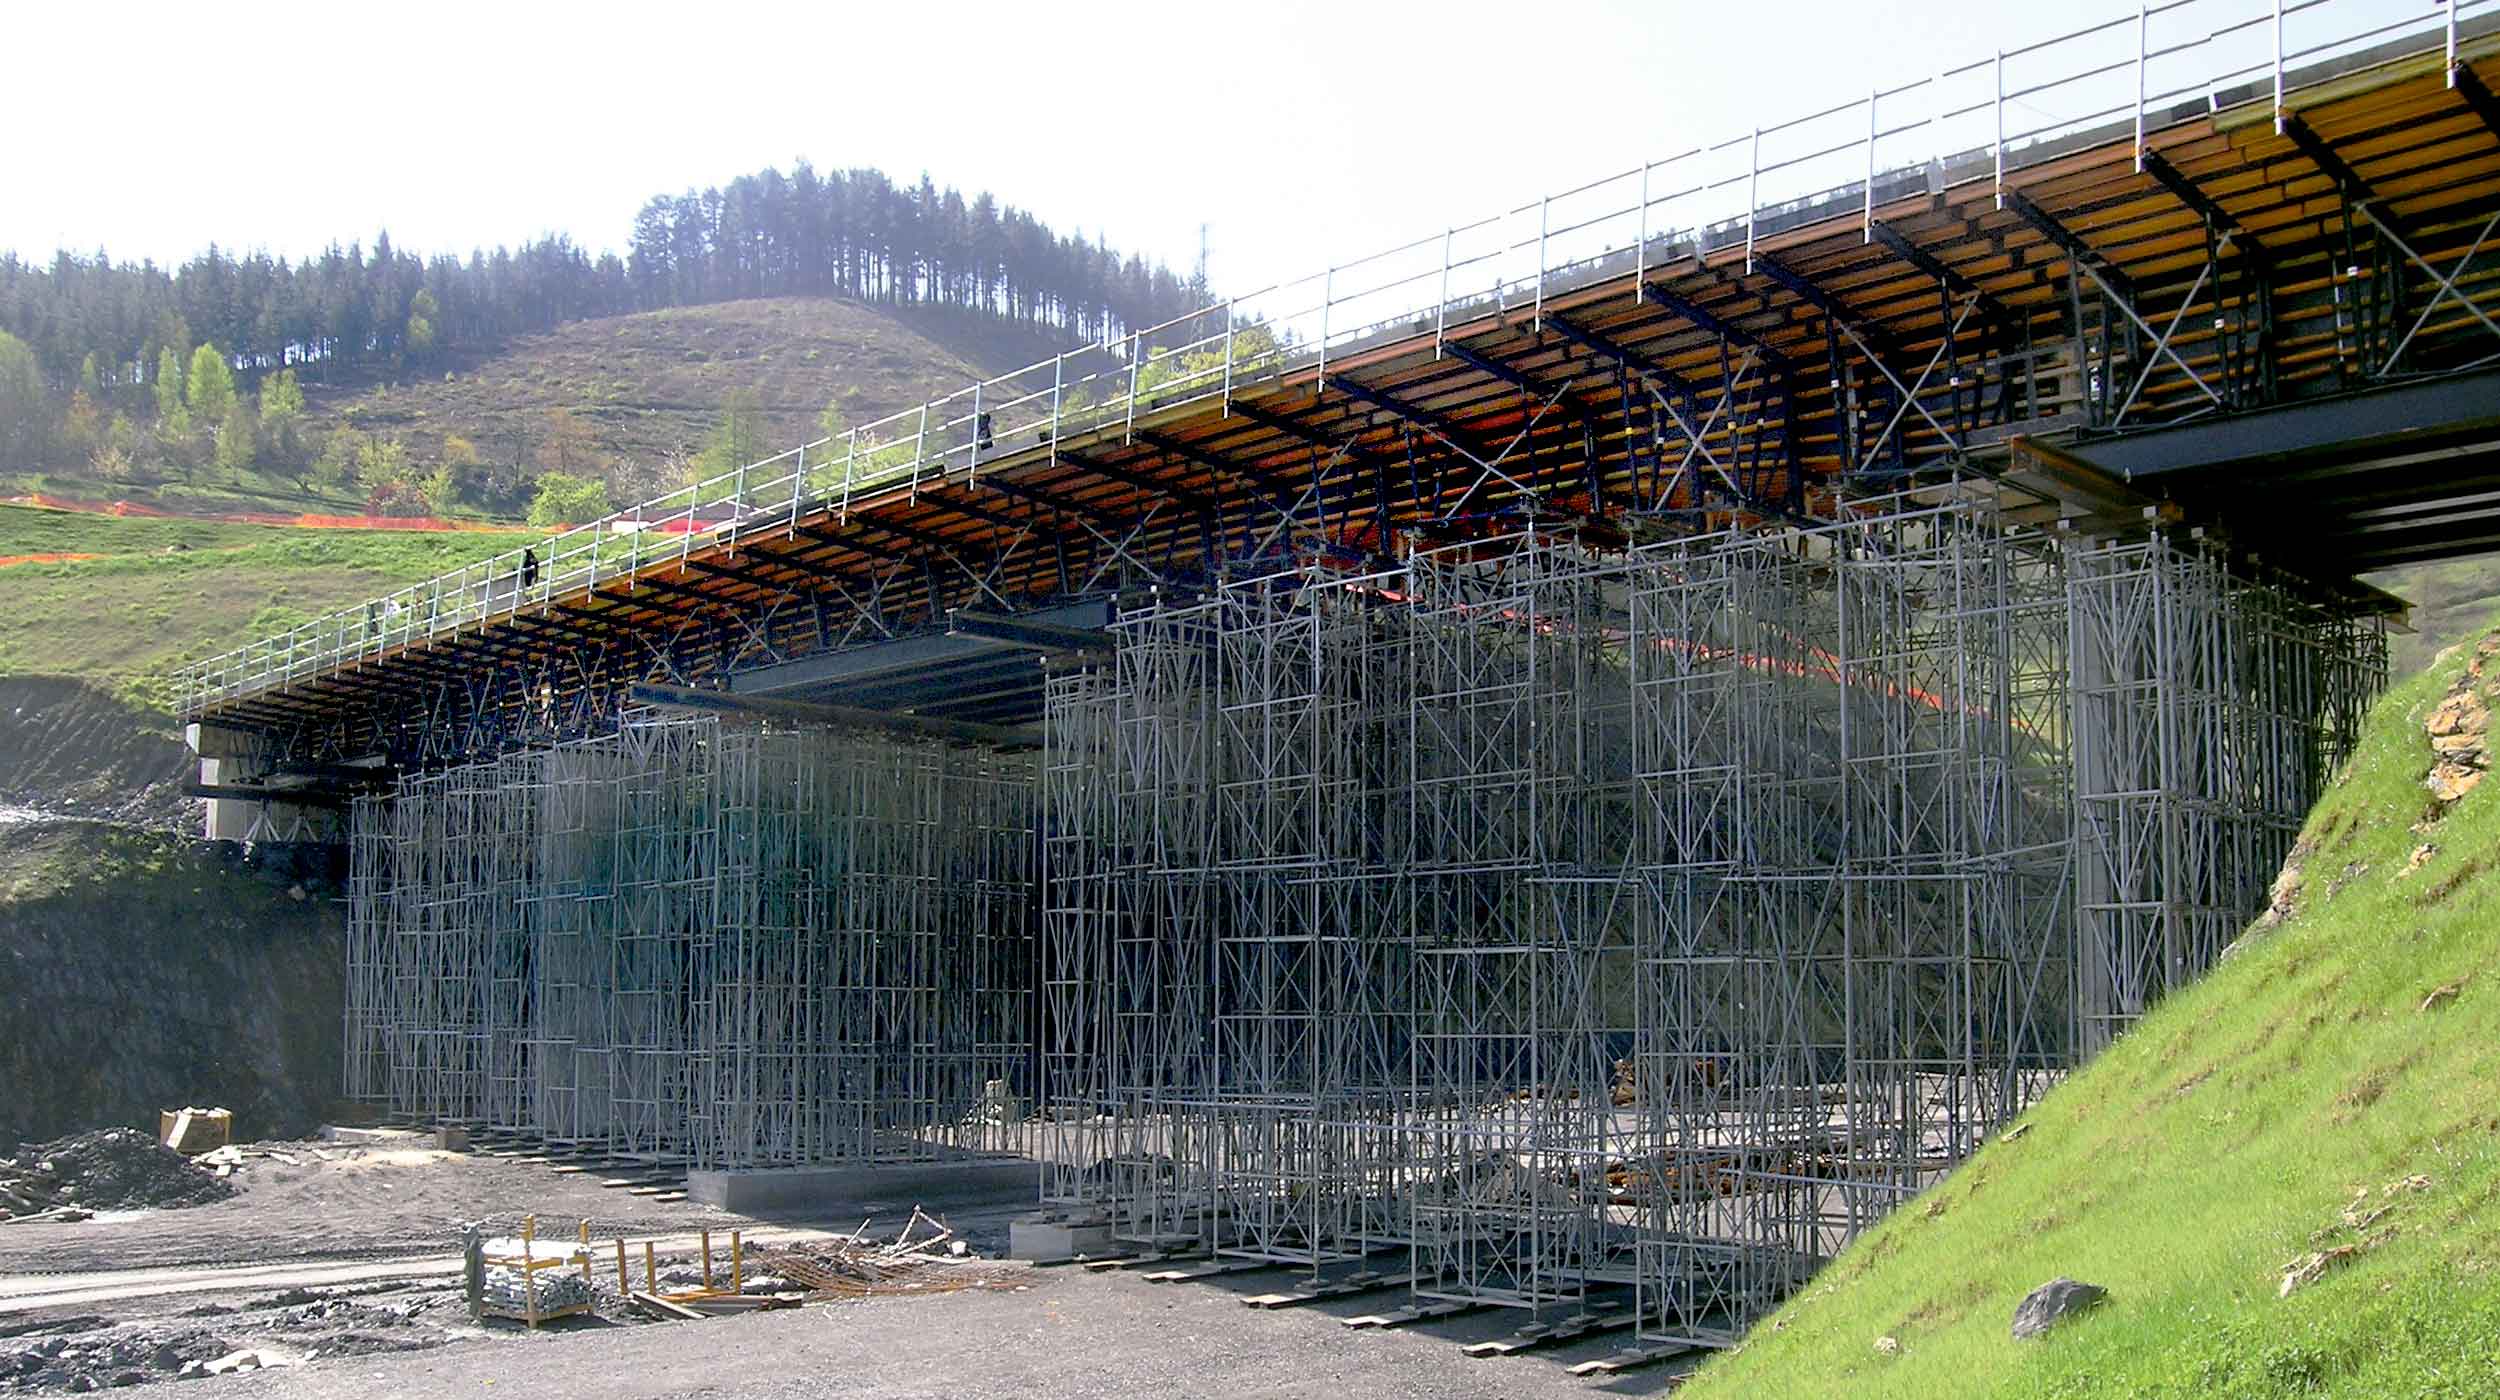 ULMA Construcción has contributed to the infrastructure improvement in the Basque Country through the construction of the Eskoriatza - Arrasate.